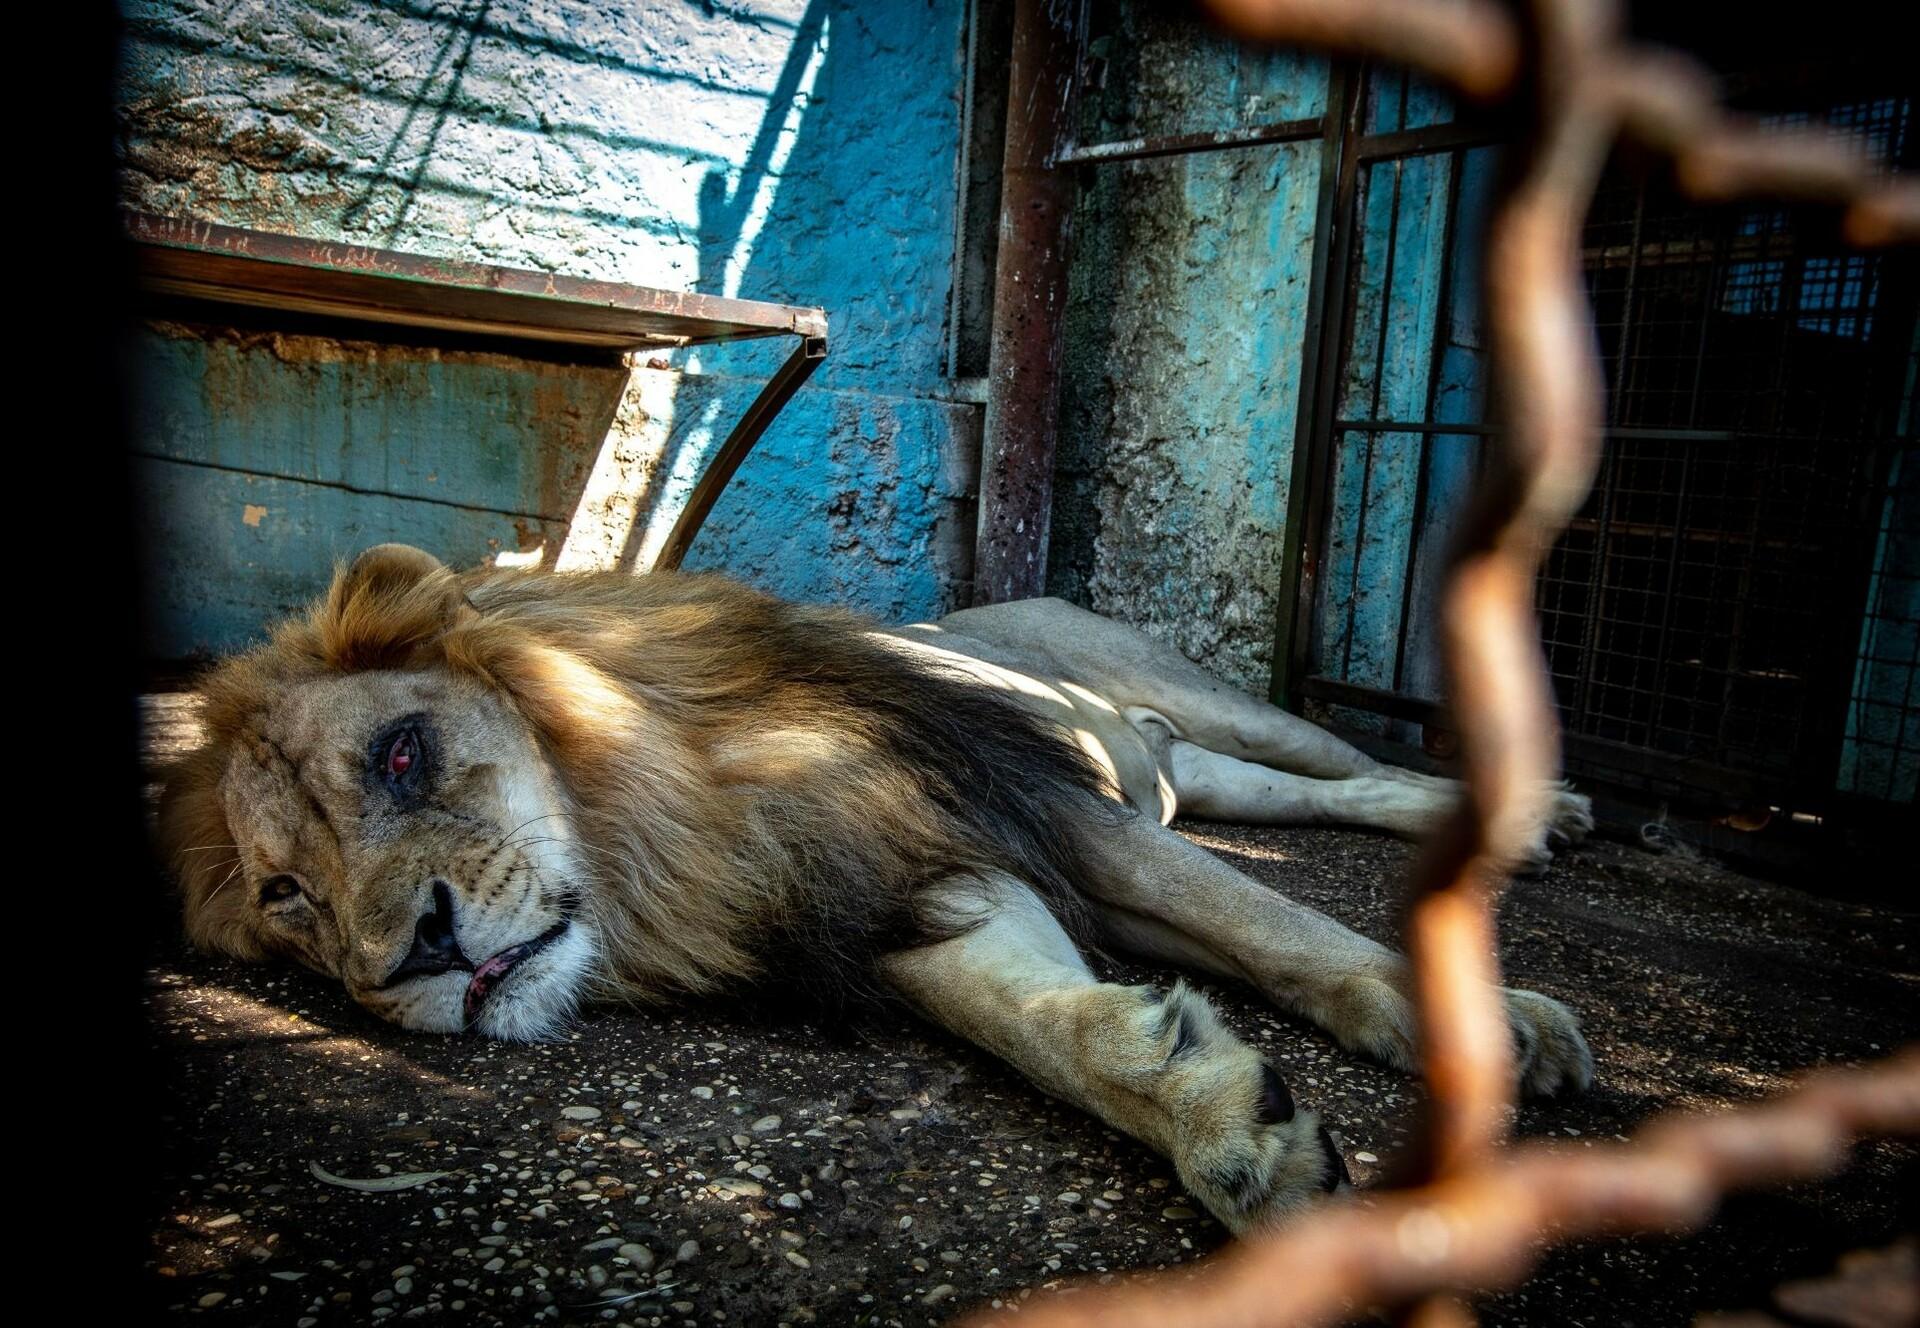 Shutting down Safari Park Zoo in Fier, Albania - FOUR PAWS Australia -  Animal Welfare Charity